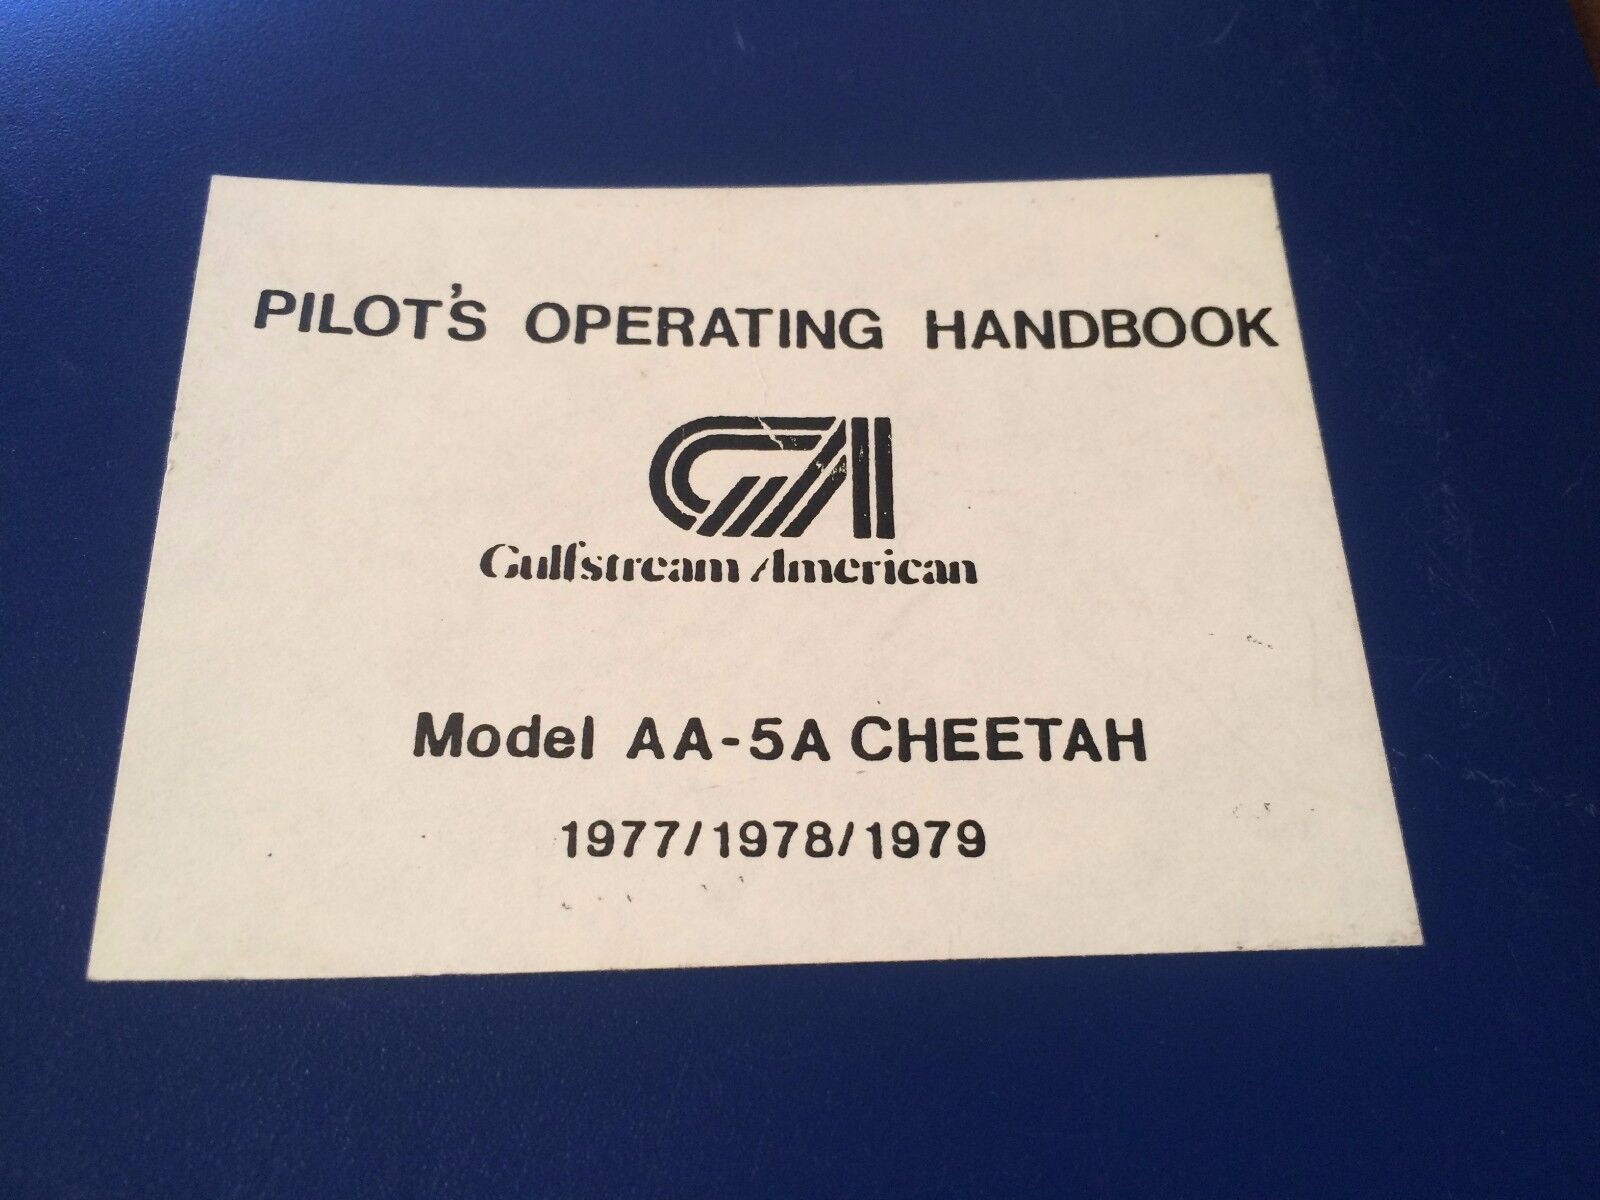 1977, 1978, 1979 Gulfstream Aerospace AA-5A Cheetah Pilot's Operating Handbook